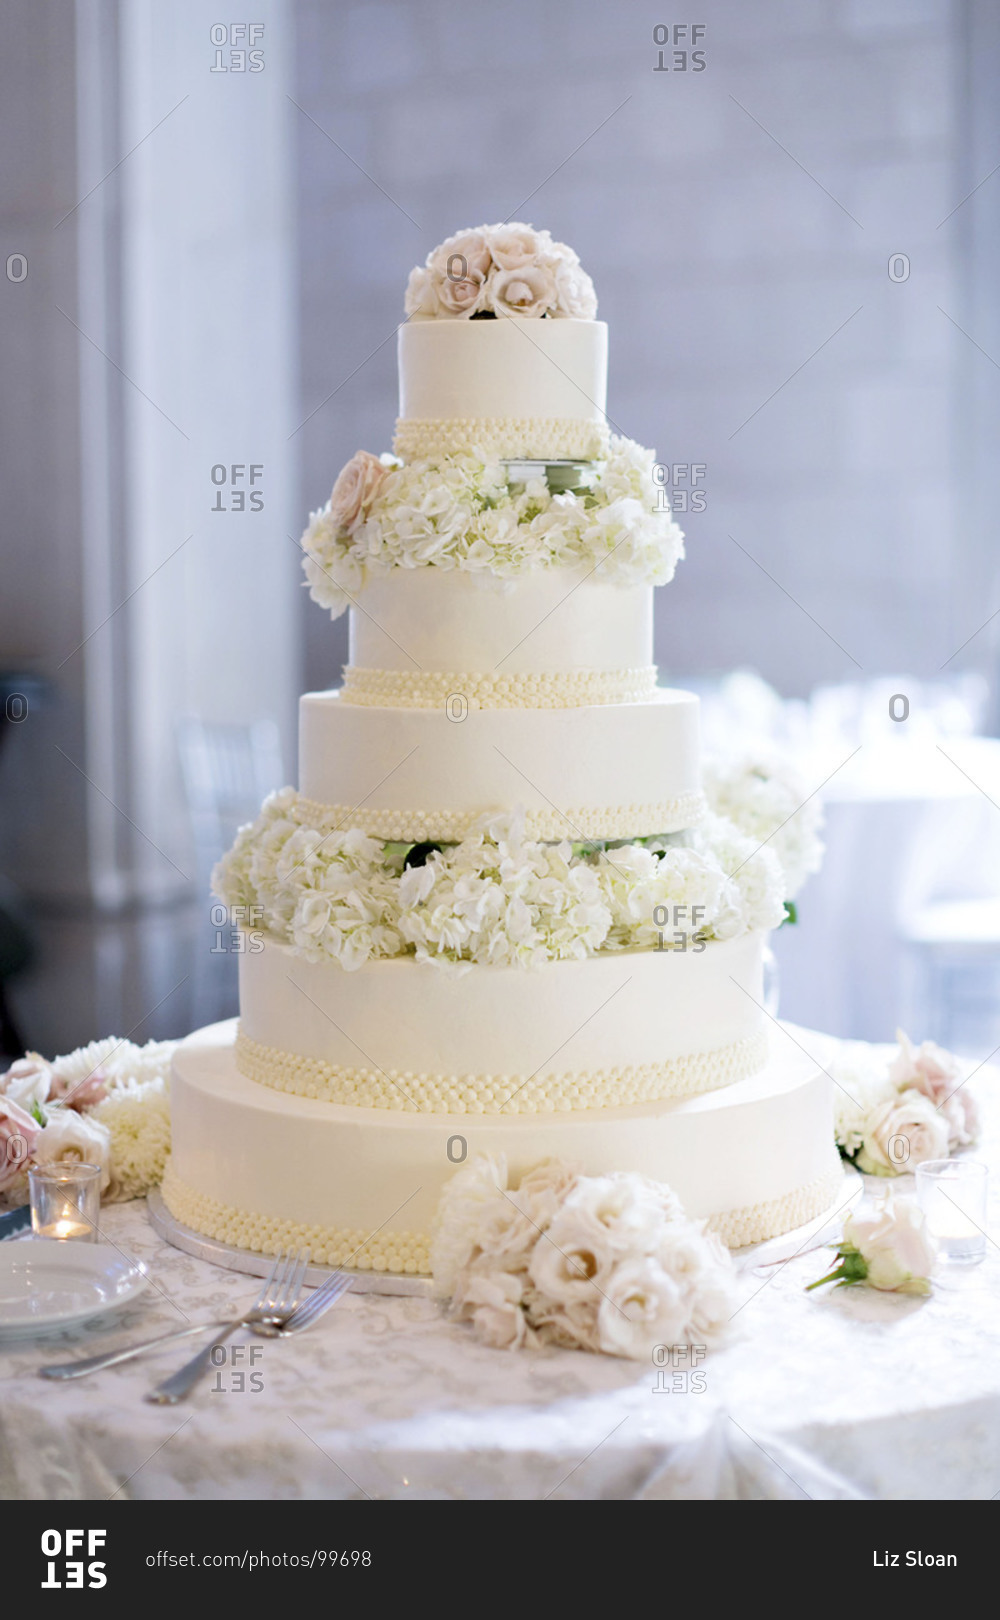 Five-tier wedding cake at wedding reception